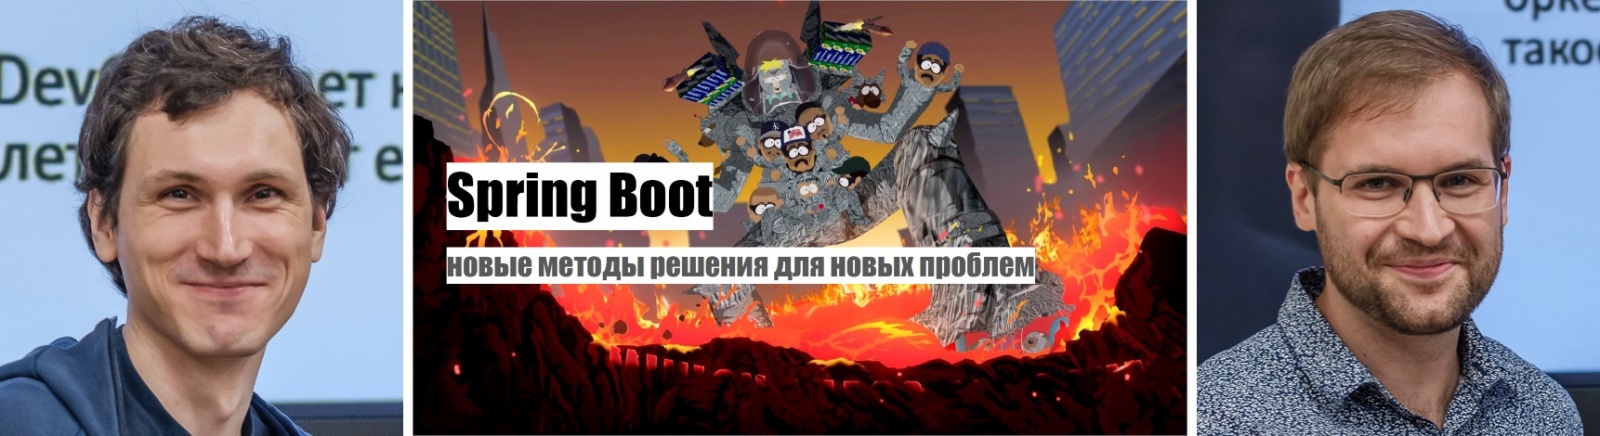 Кирилл Толкачёв и Максим Гореликов про Spring Boot на jug.msk.ru - 1